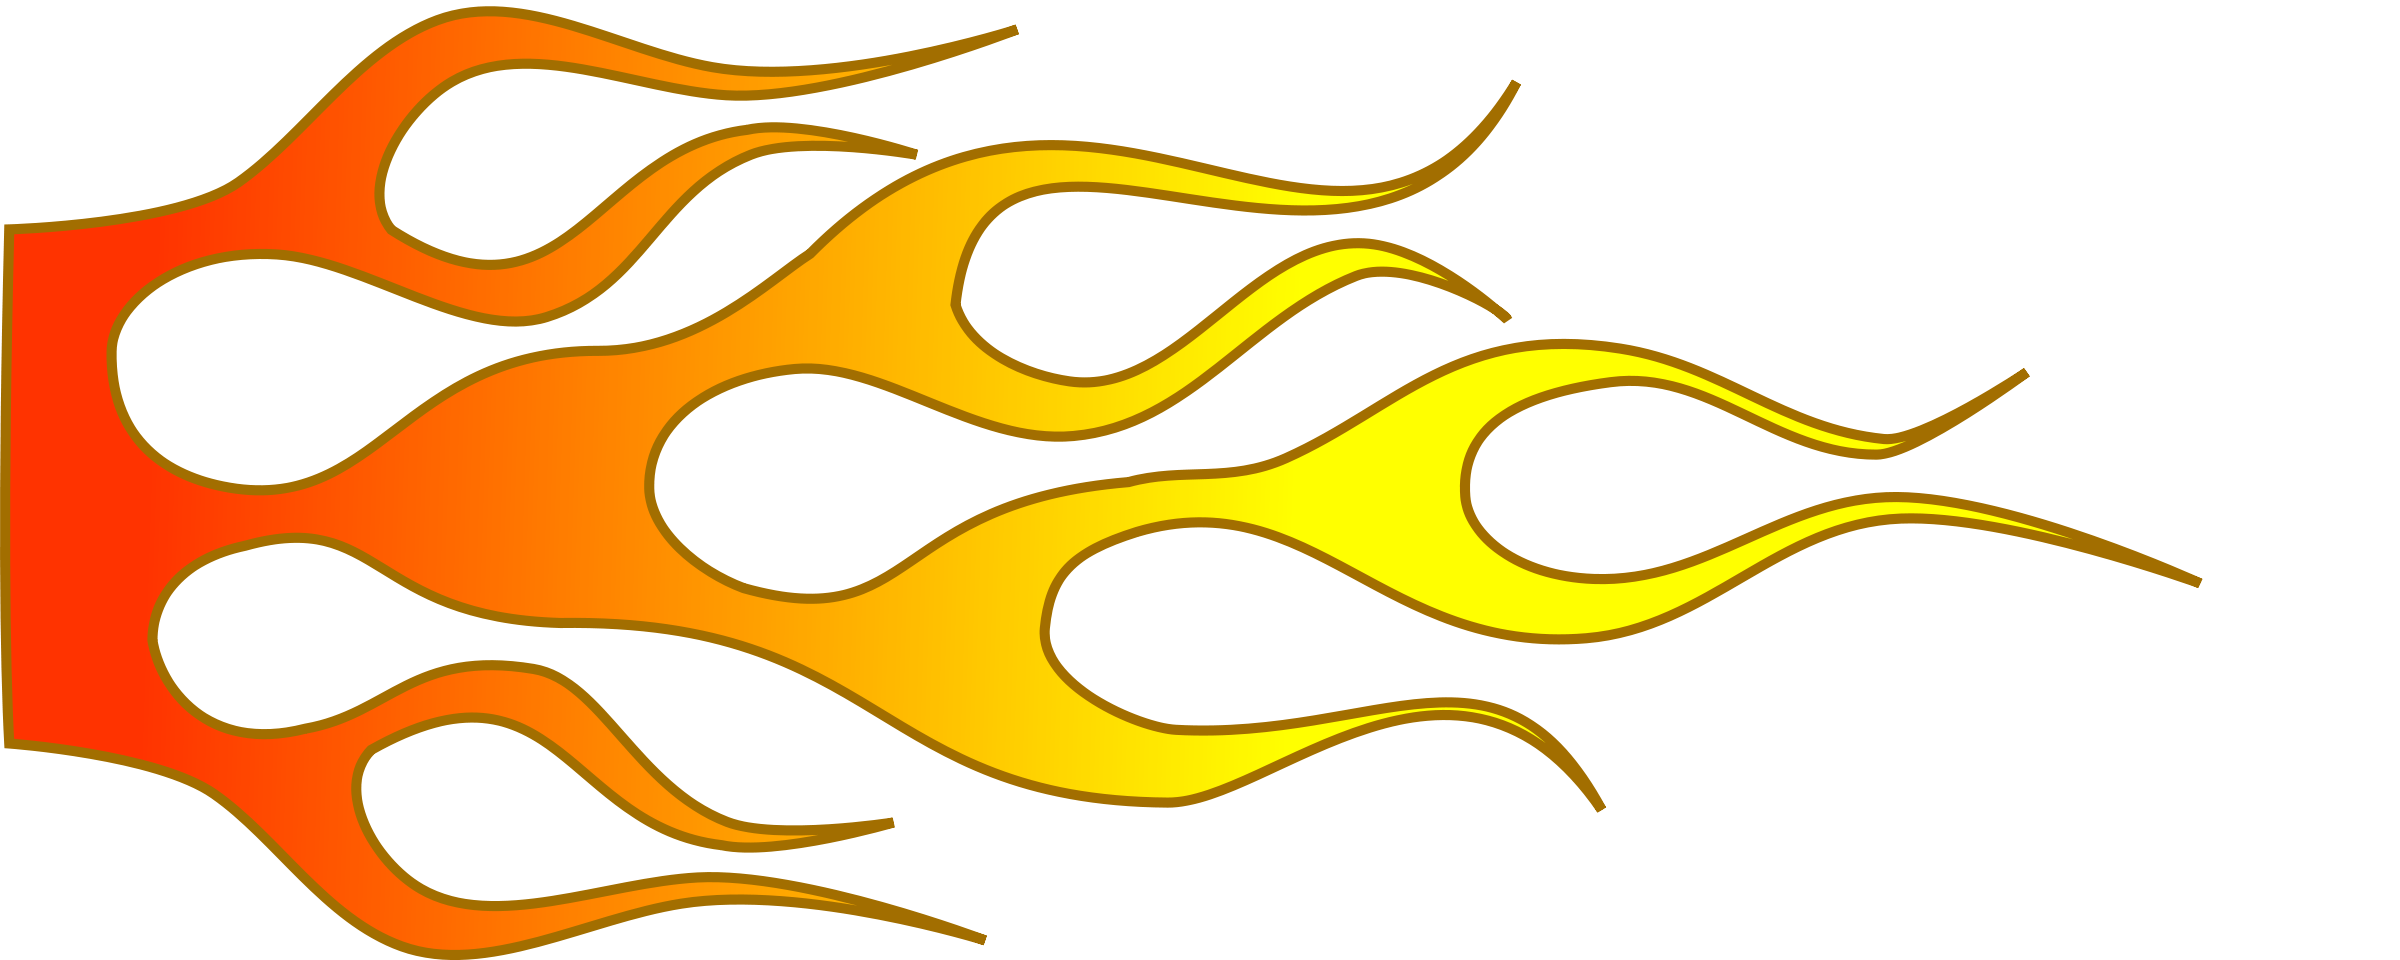 Flame Logo Designs Clipart